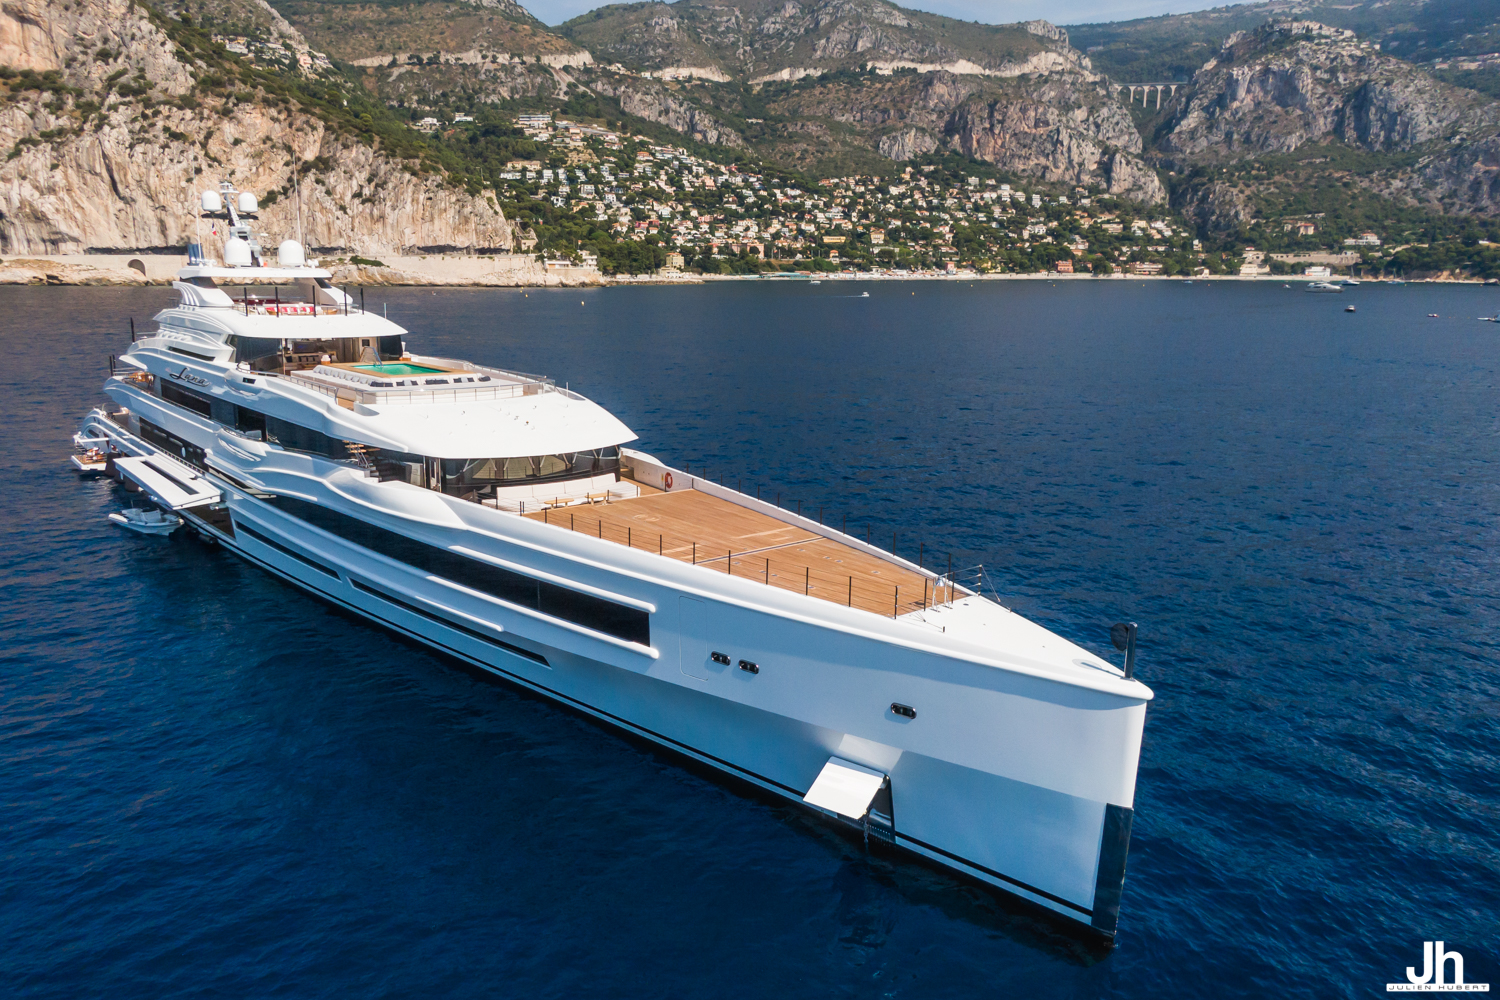 107m Benetti FB277 yacht LANA on the French Riviera